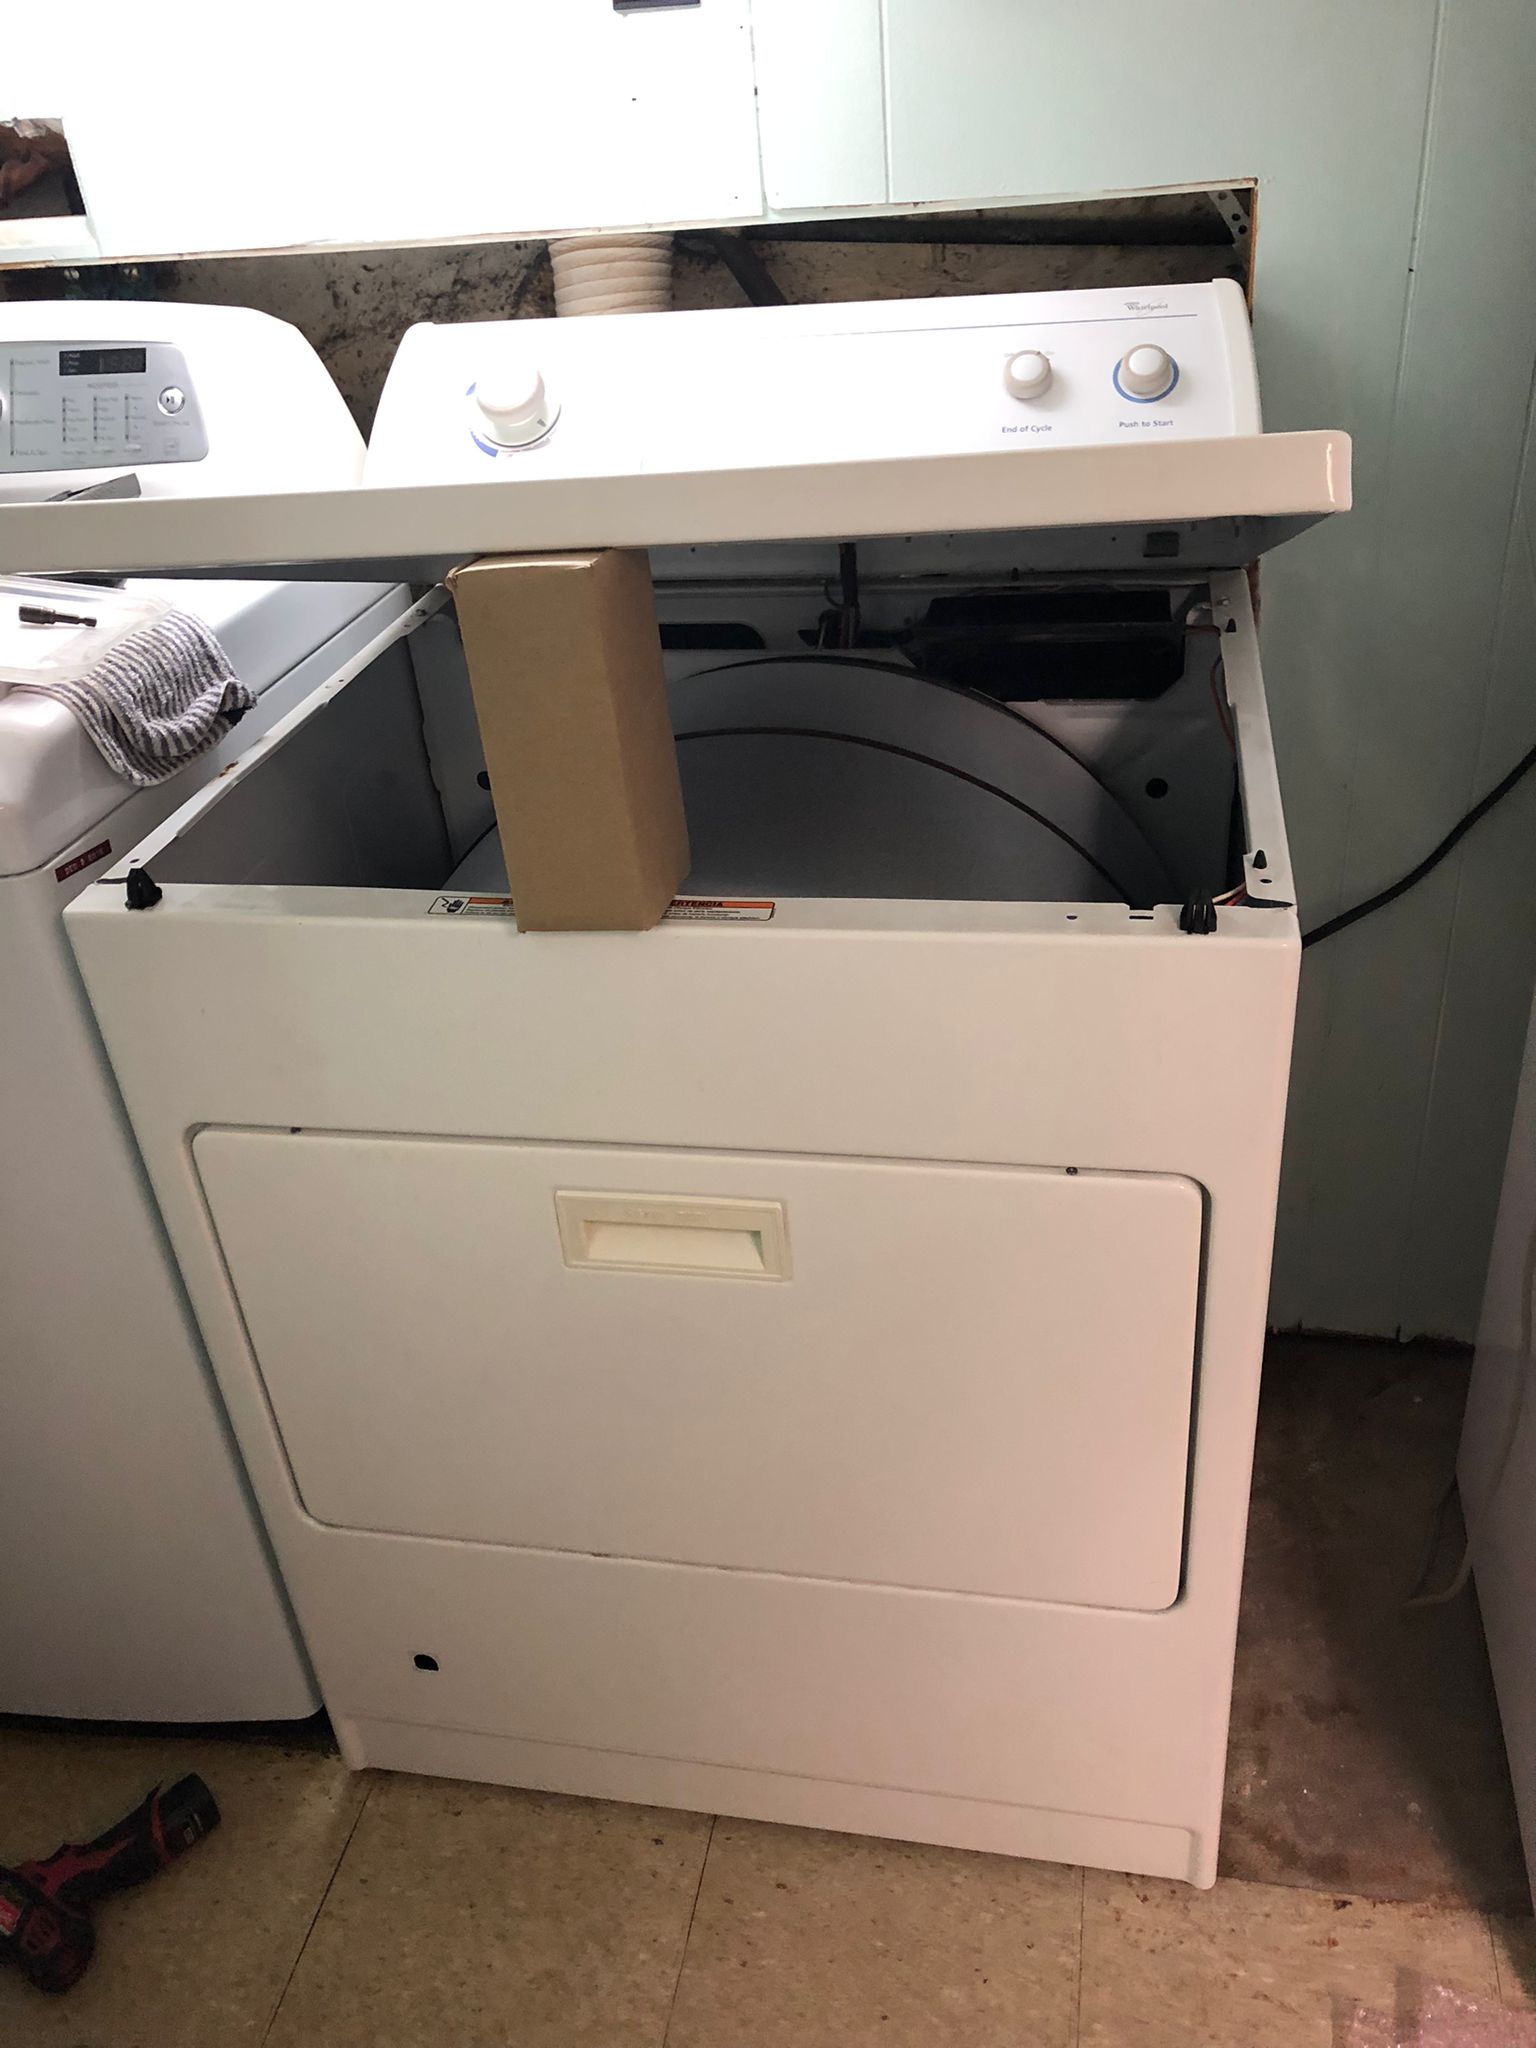 Best Dryer Repair service in Bayshore NY